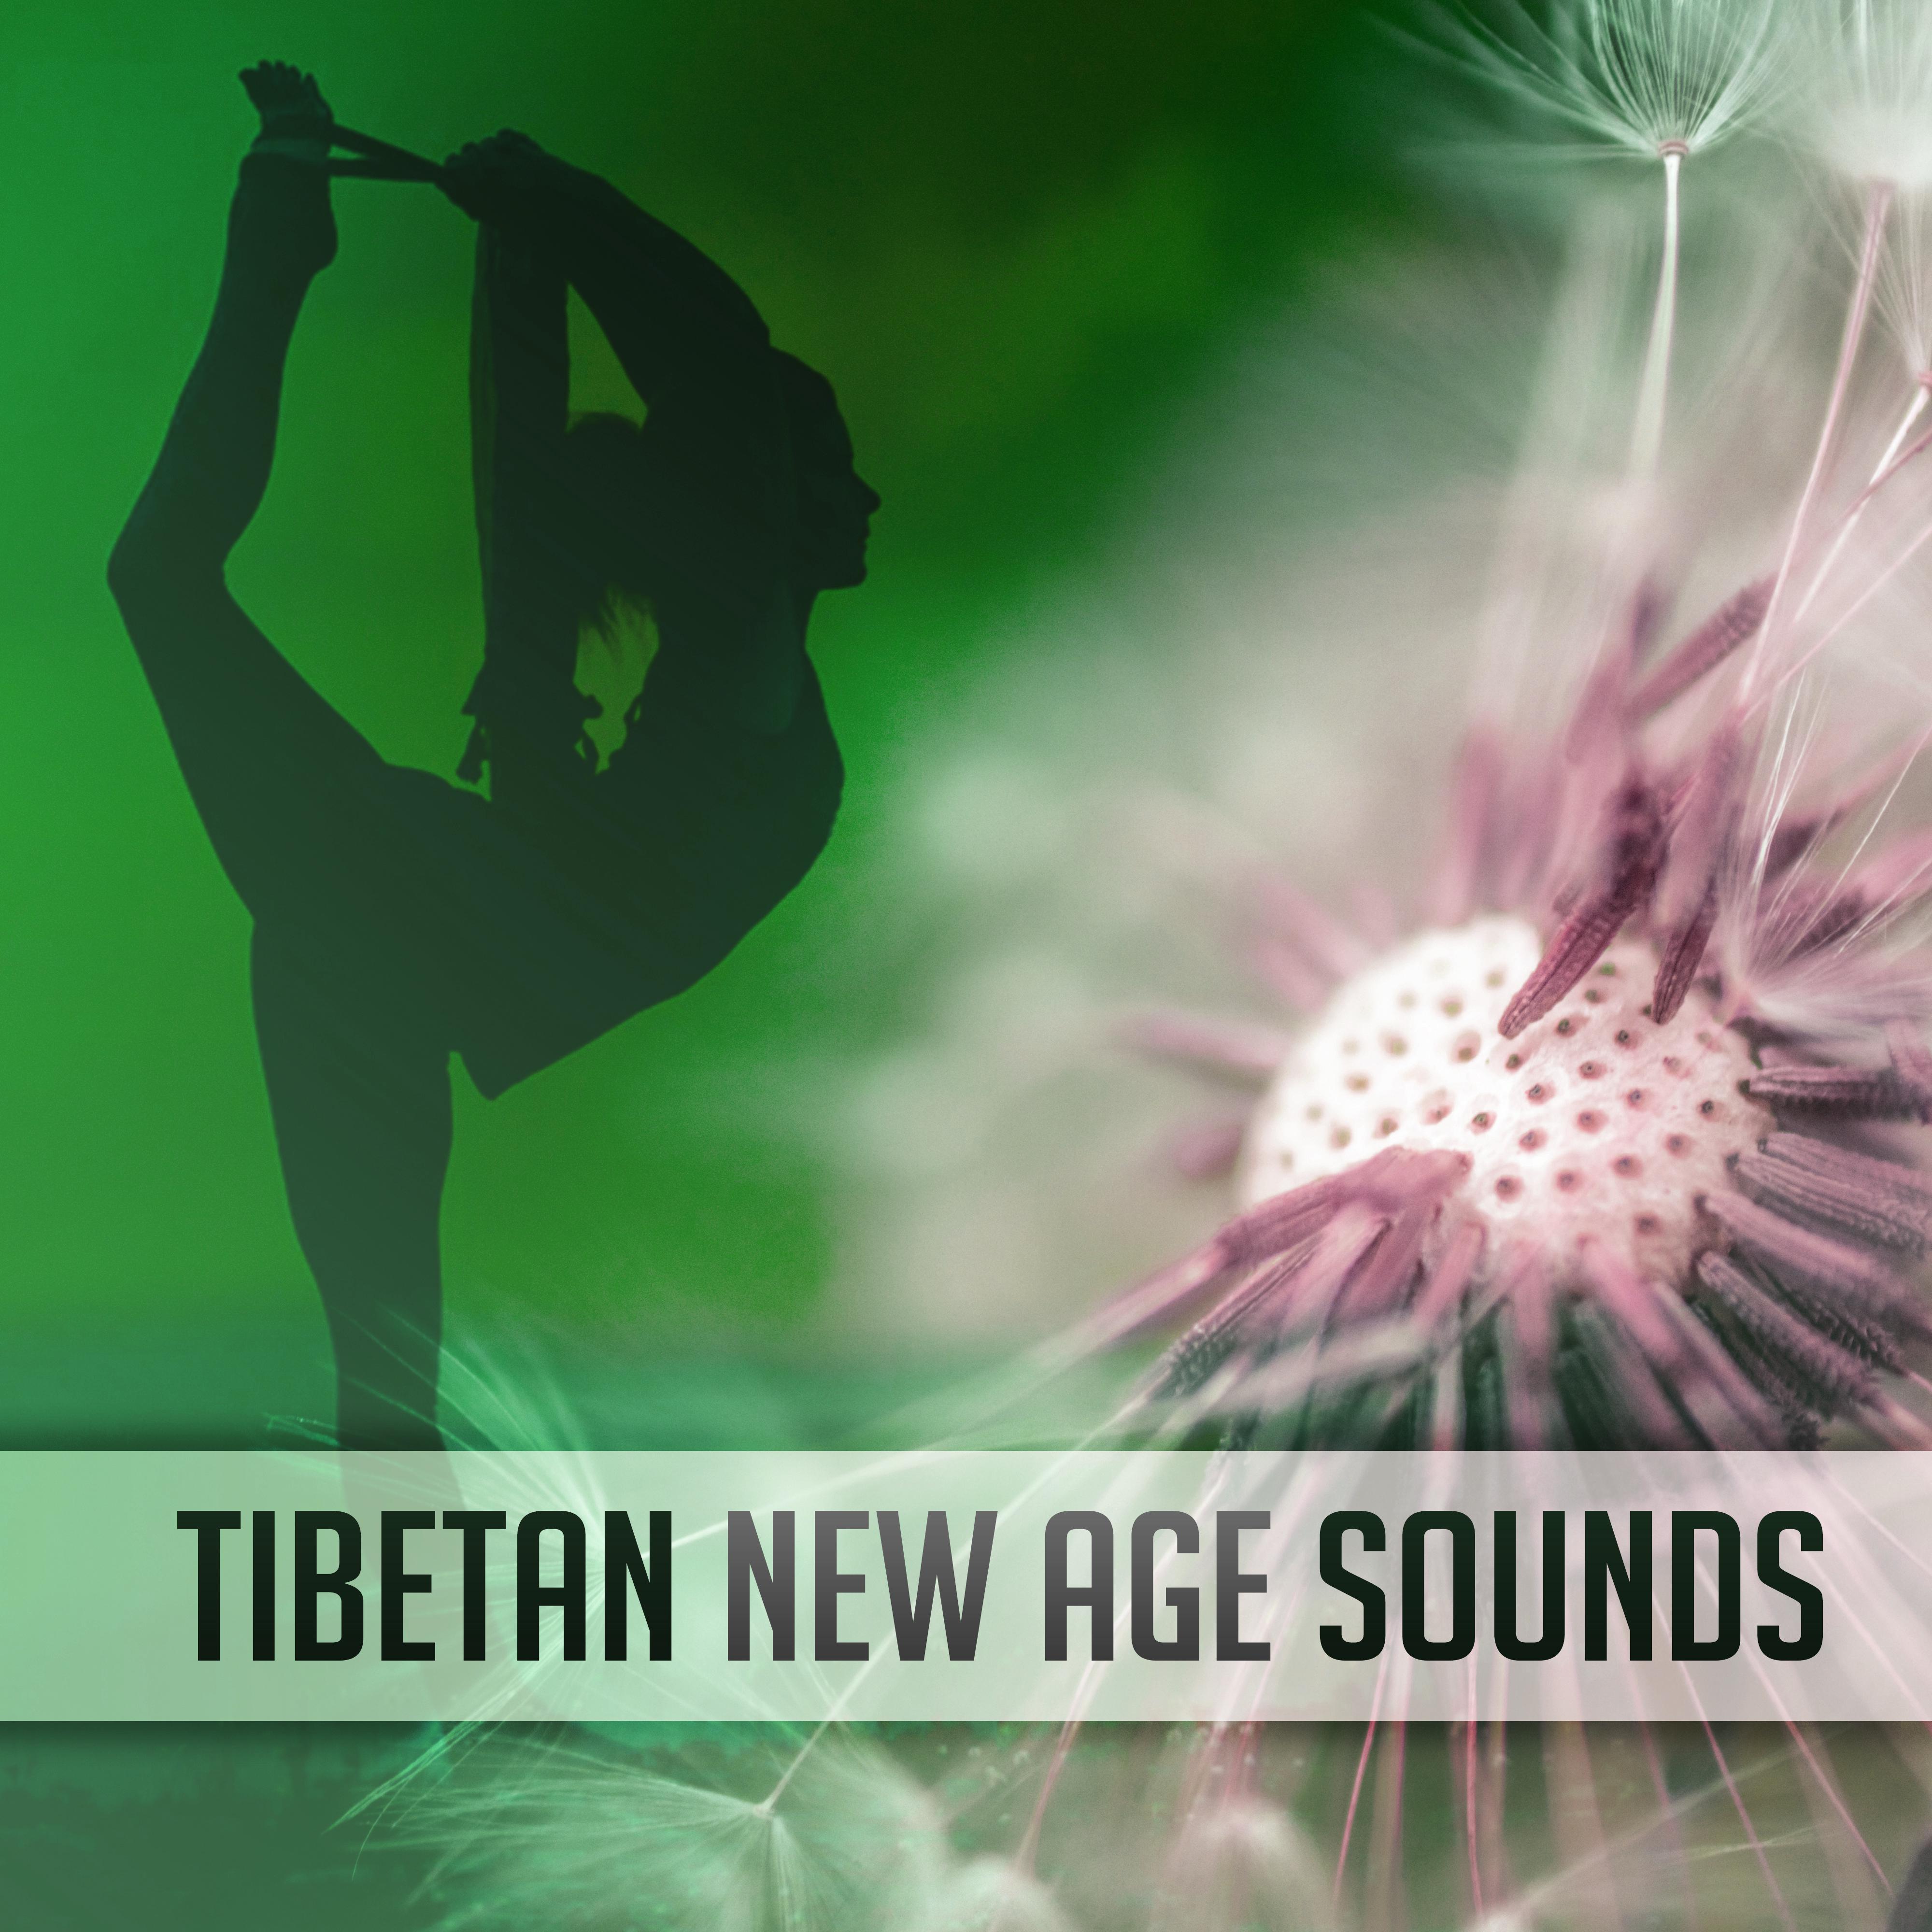 Tibetan New Age Sounds  Calm Meditation Sounds, Music to Relax, Mind Control, Buddha Lounge